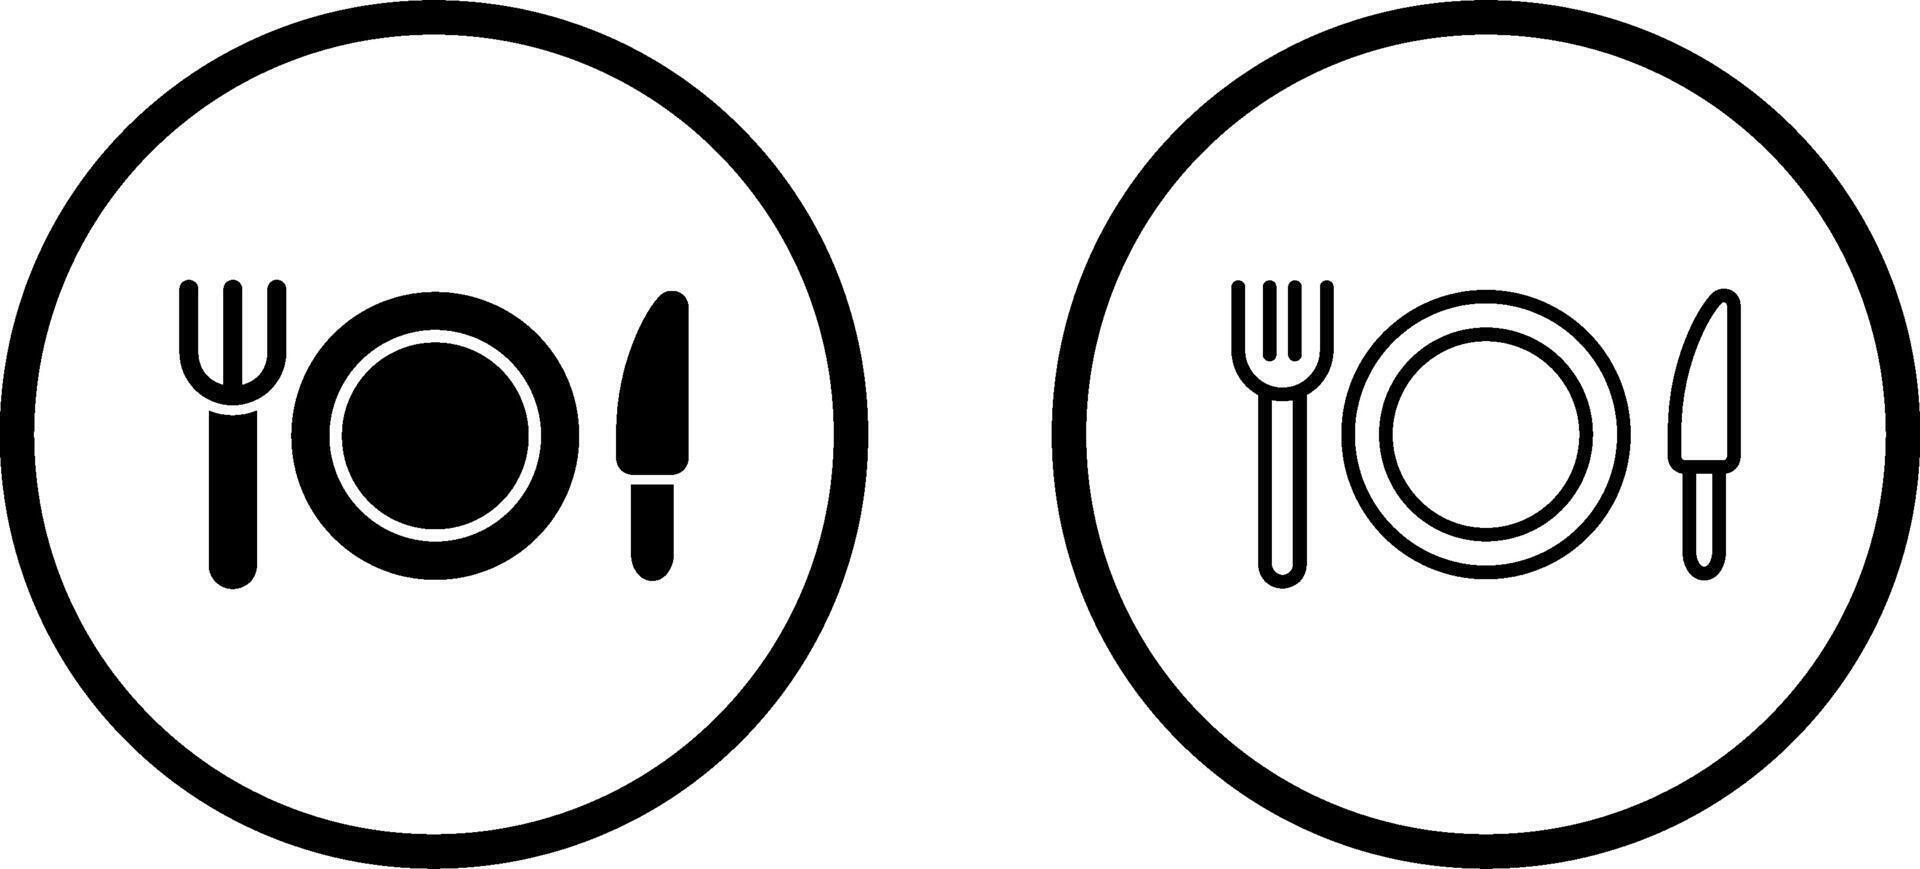 Lebensmittel-Vektor-Symbol vektor